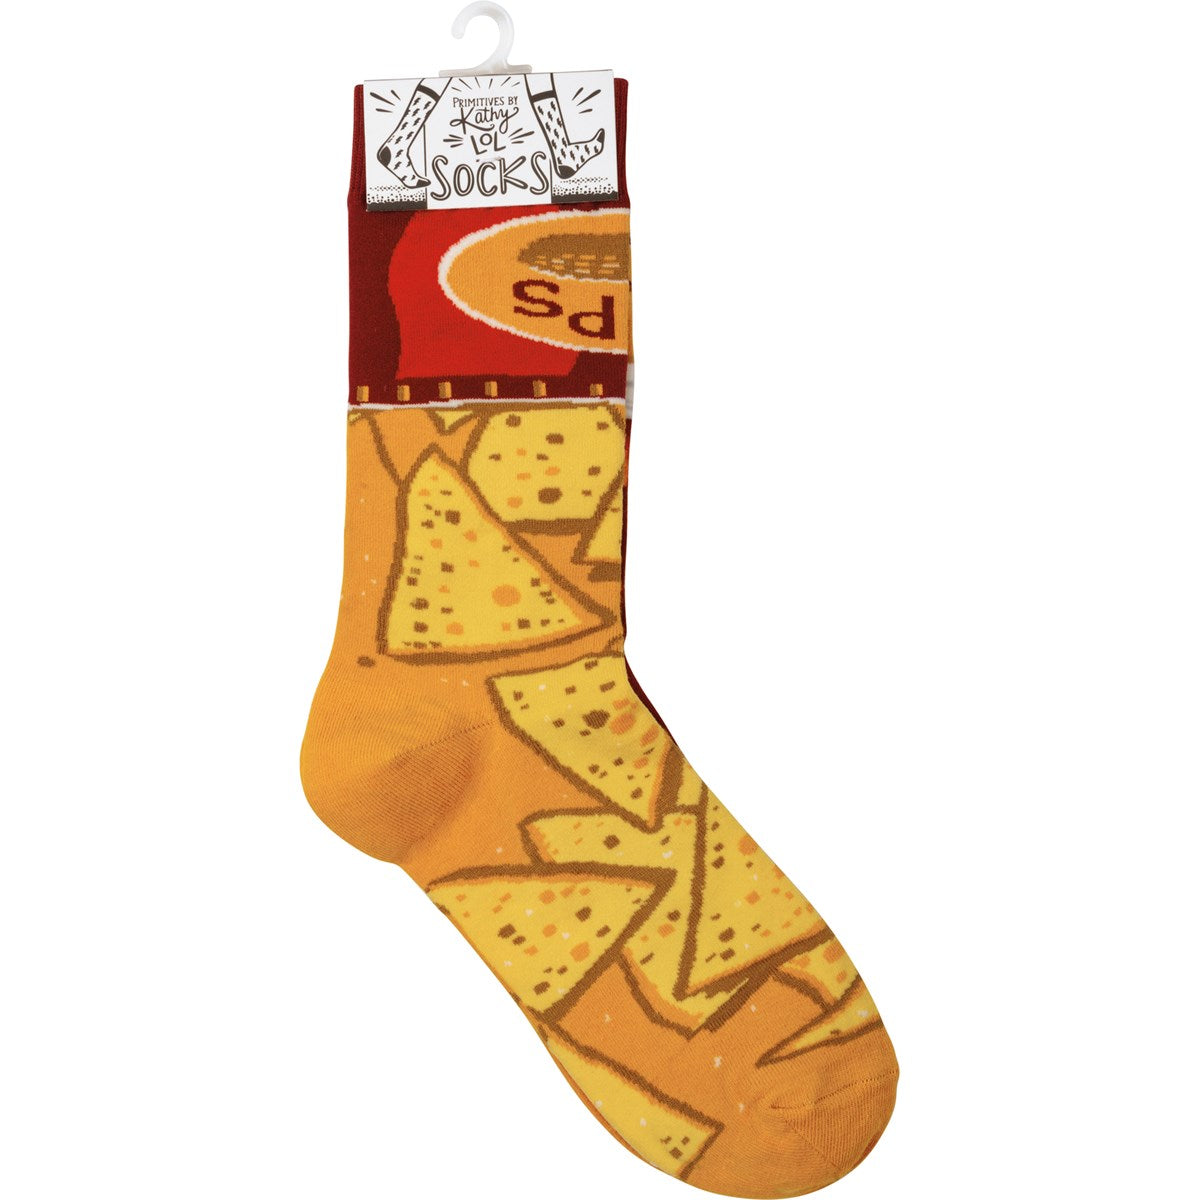 Chips and Salsa Socks